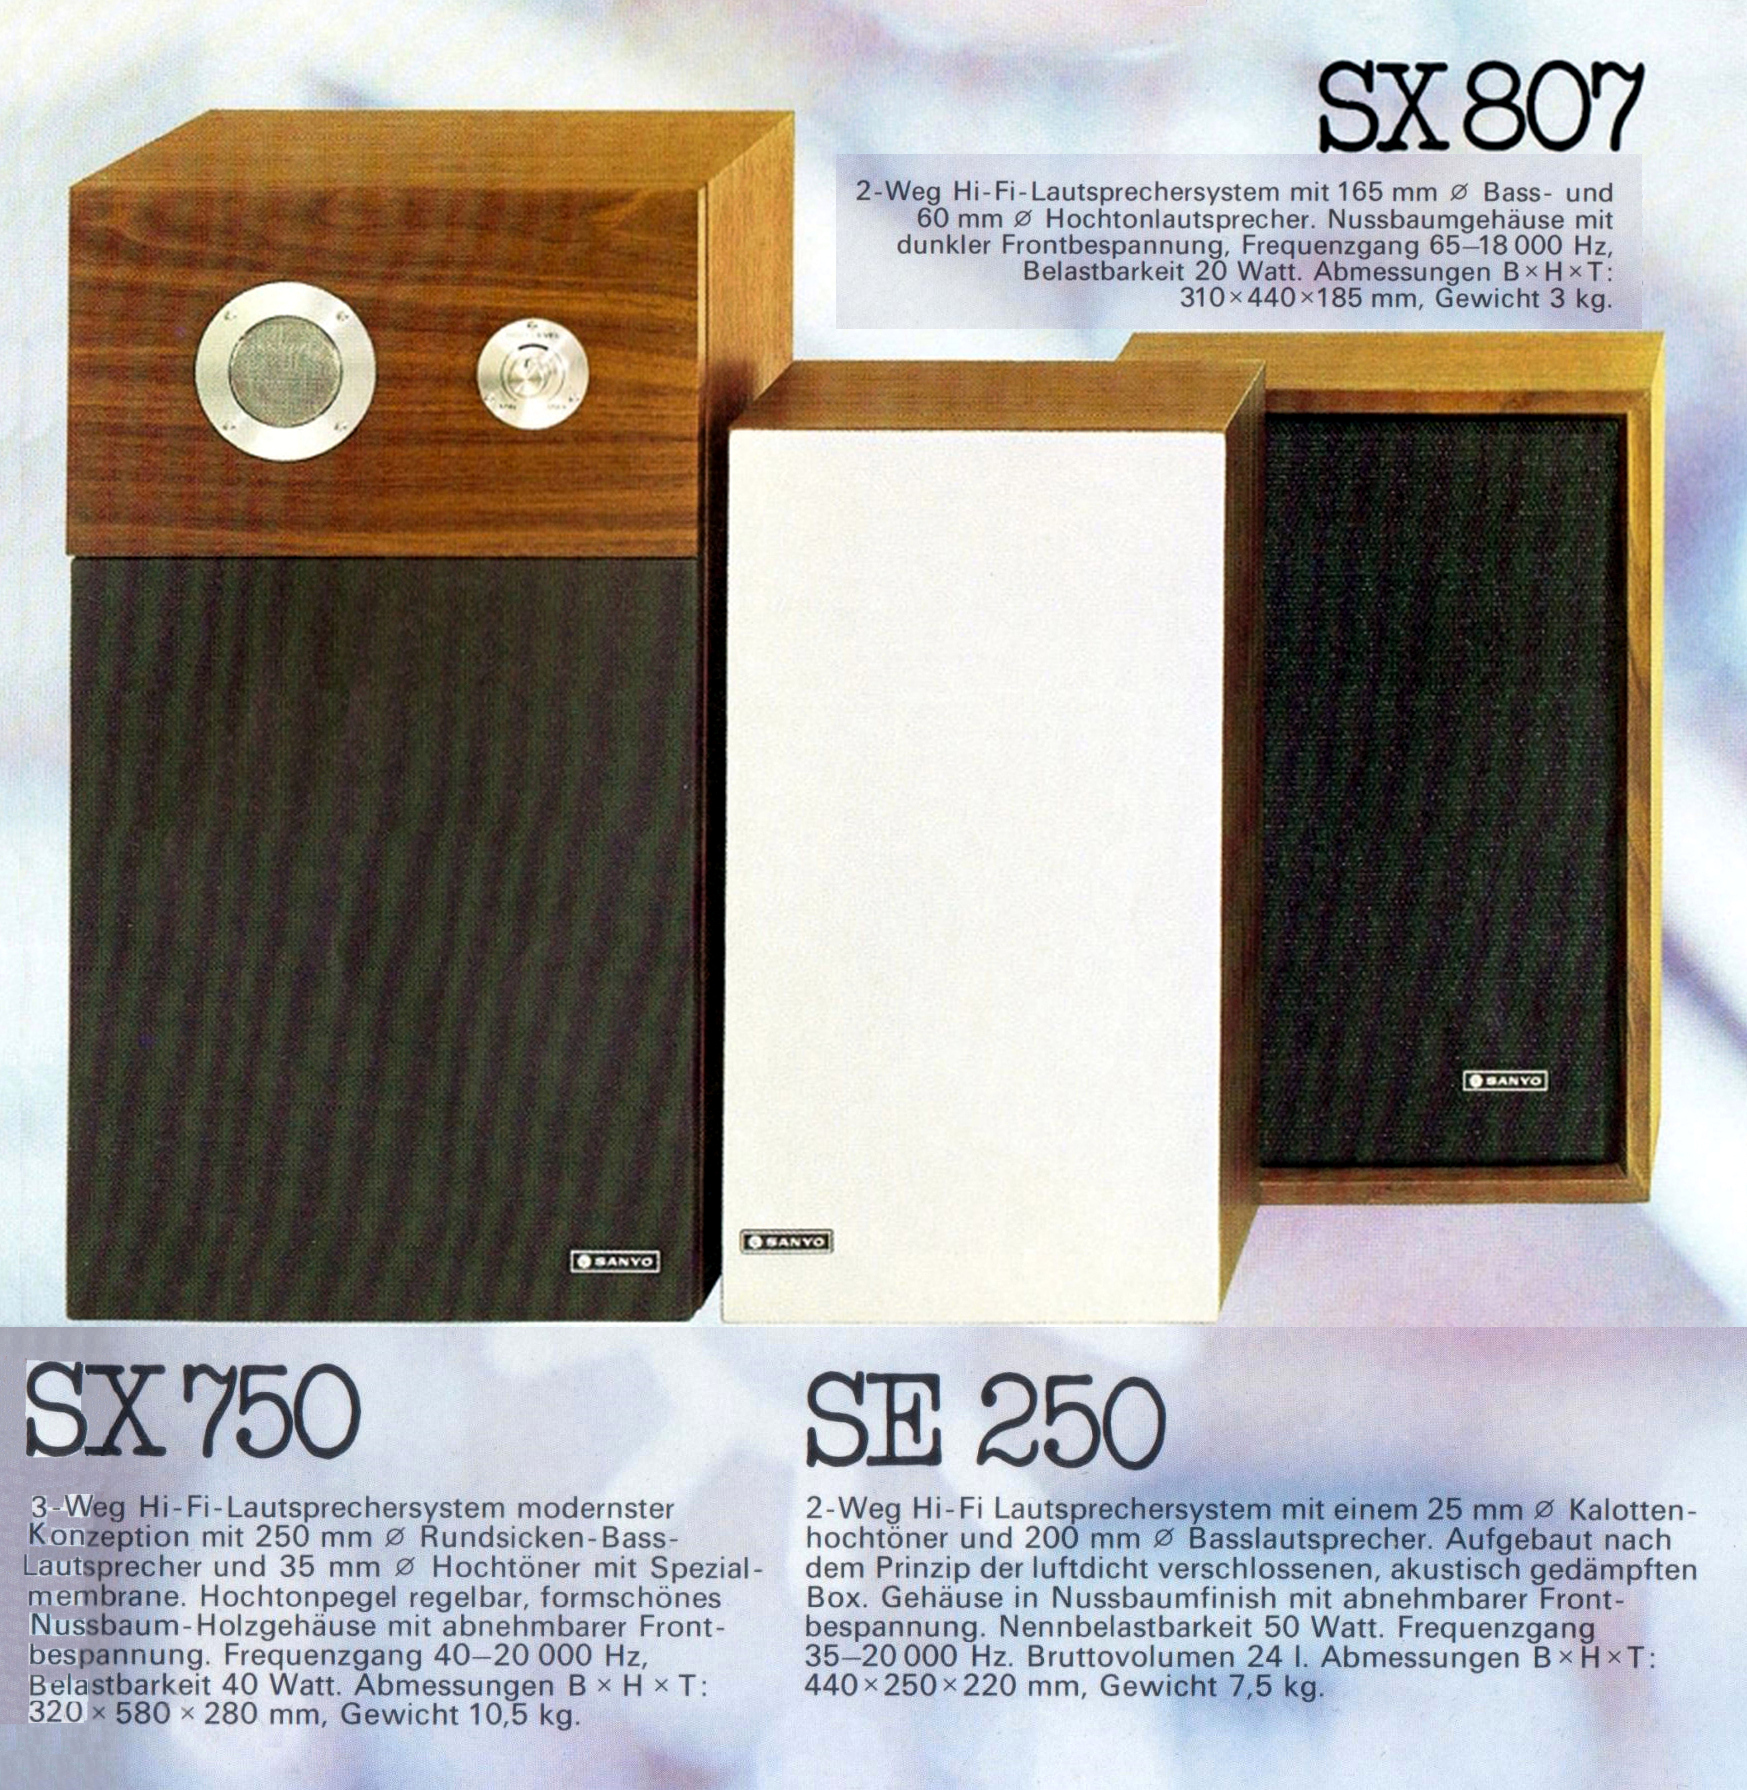 Sanyo SX-750-Prospekt-1975.jpg